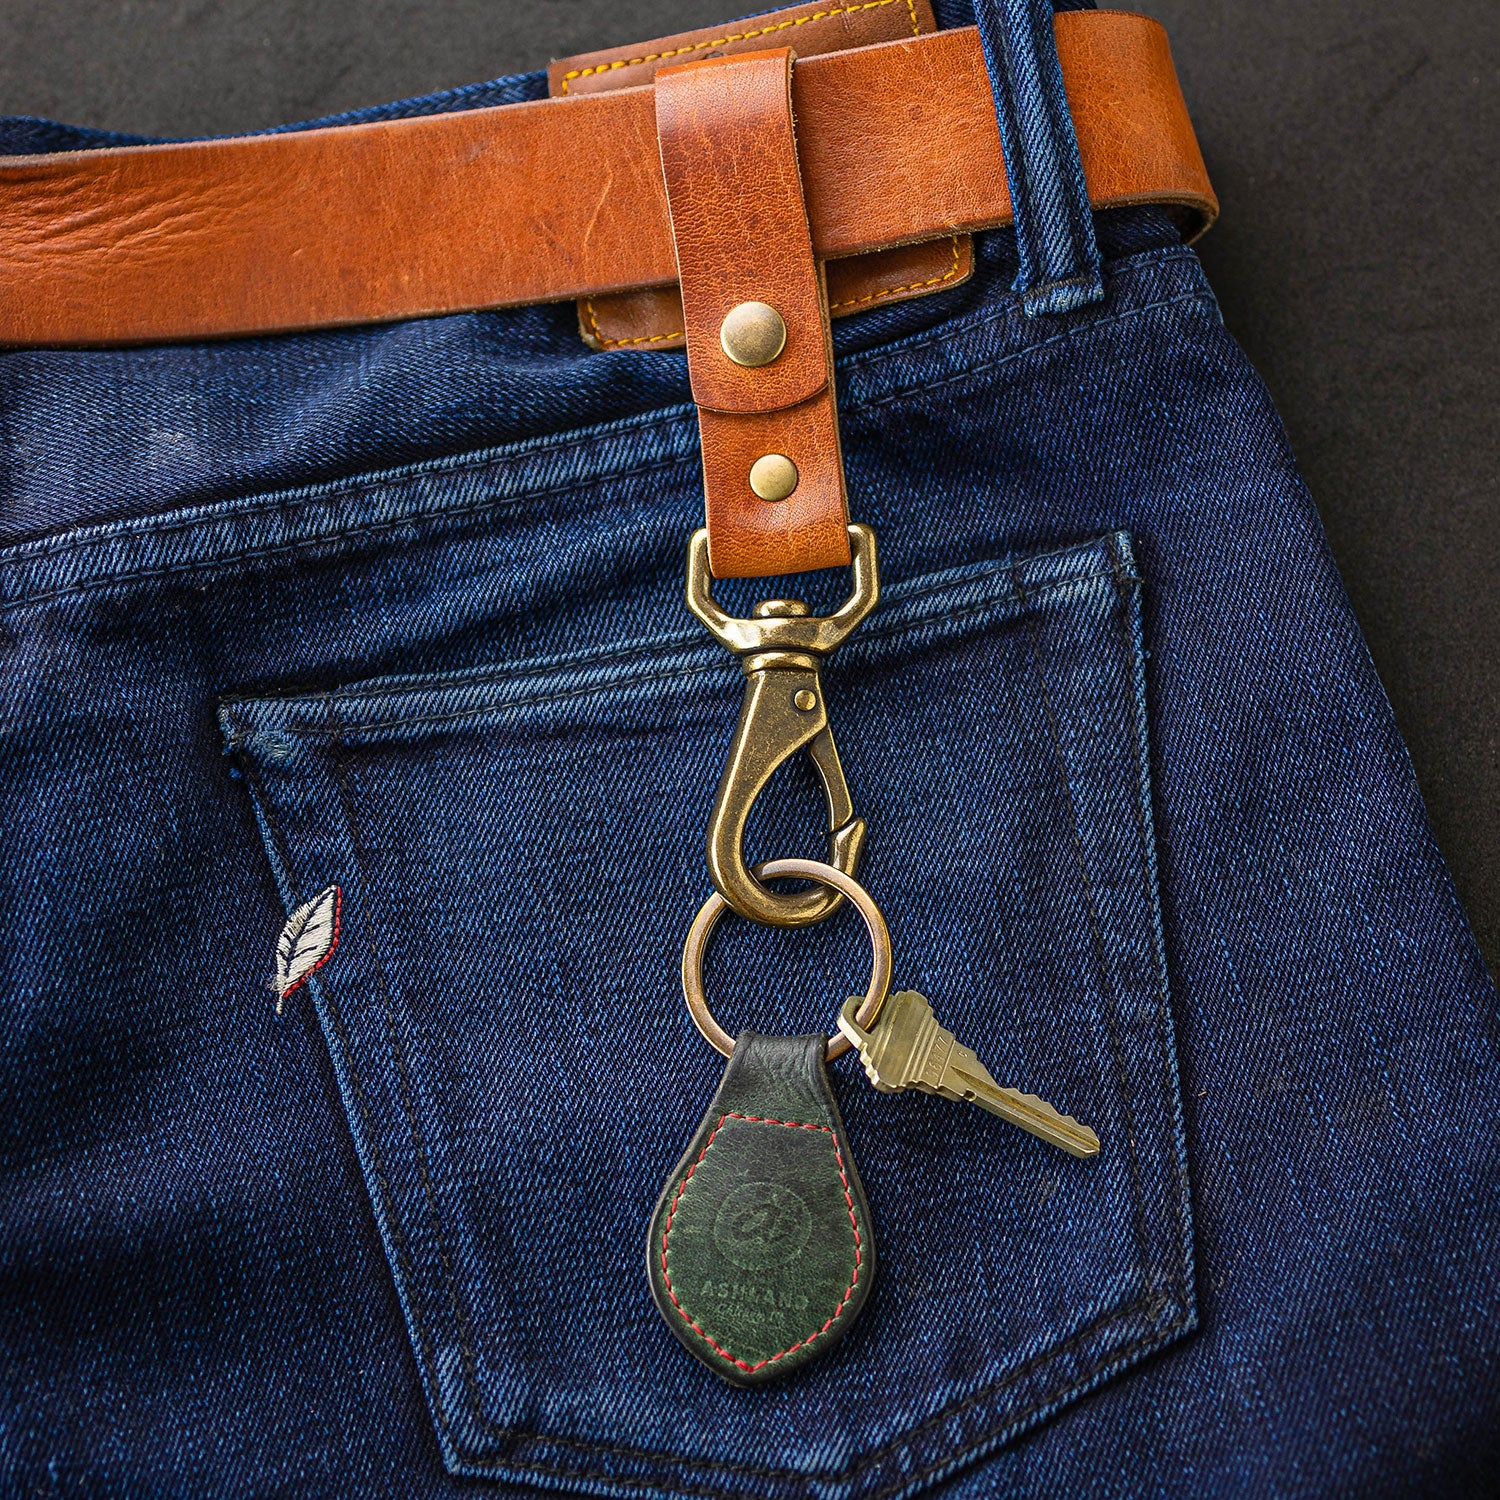 Handmade Leather Belt Clip Keychain